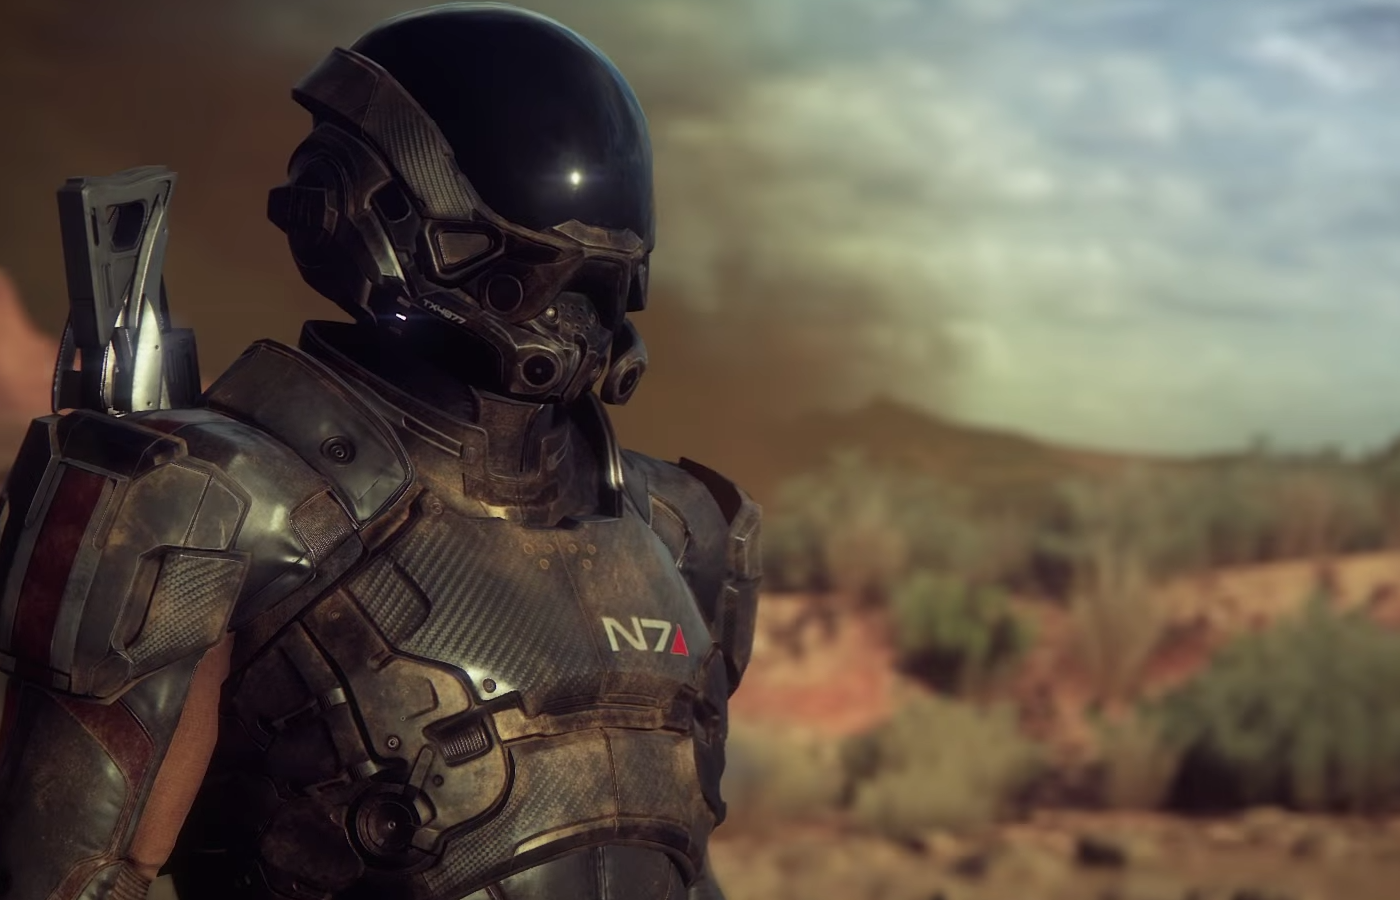 Mass Effect Andromeda Box Art Leaked Ahead of Announcement - Gameranx